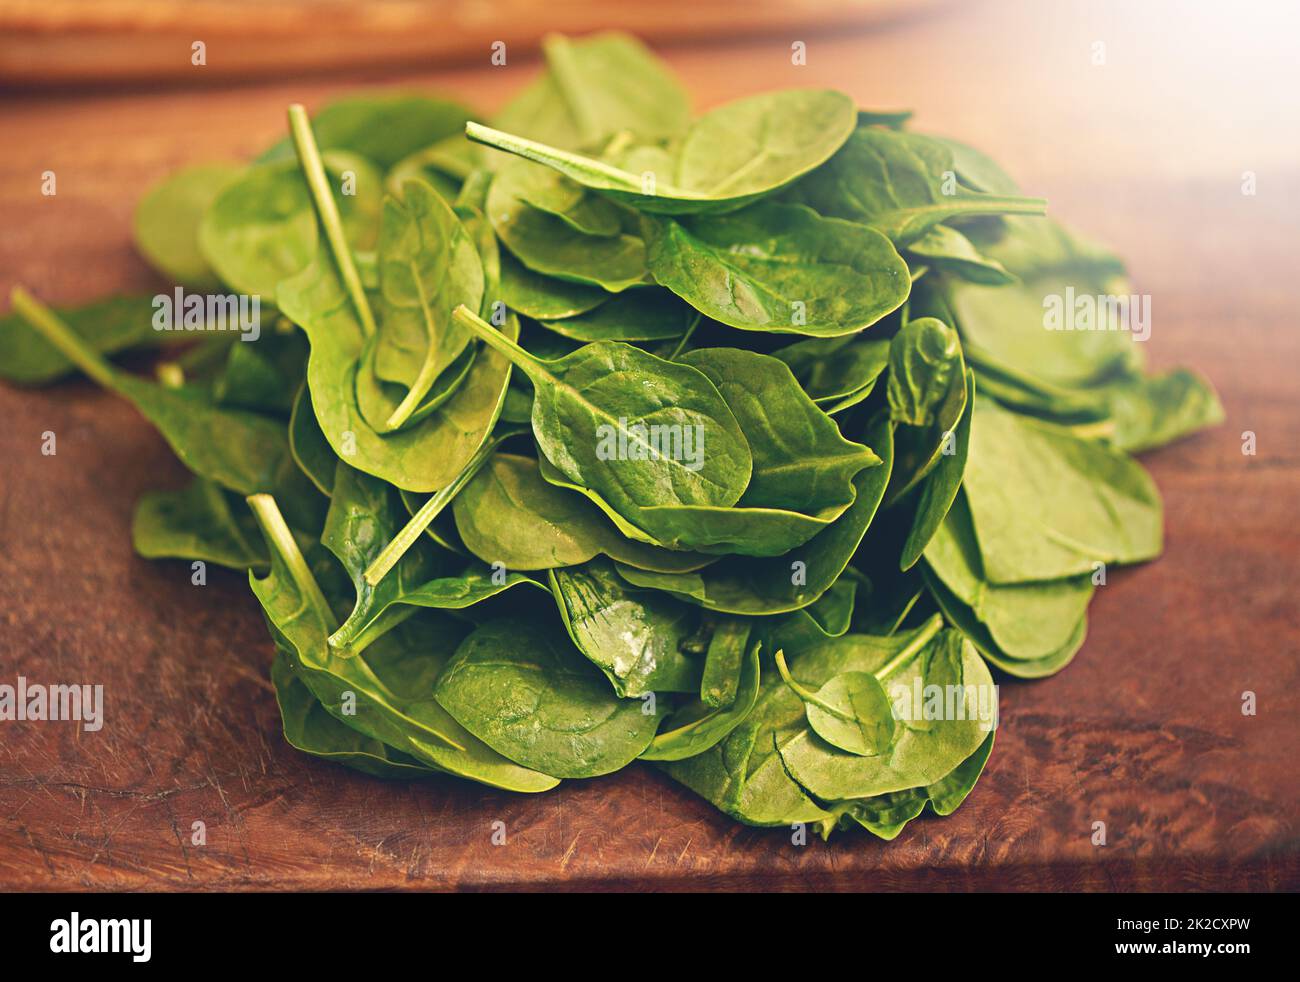 Bel basilico verde. Shot di foglie di basilico fresco su un tavolo da cucina. Foto Stock